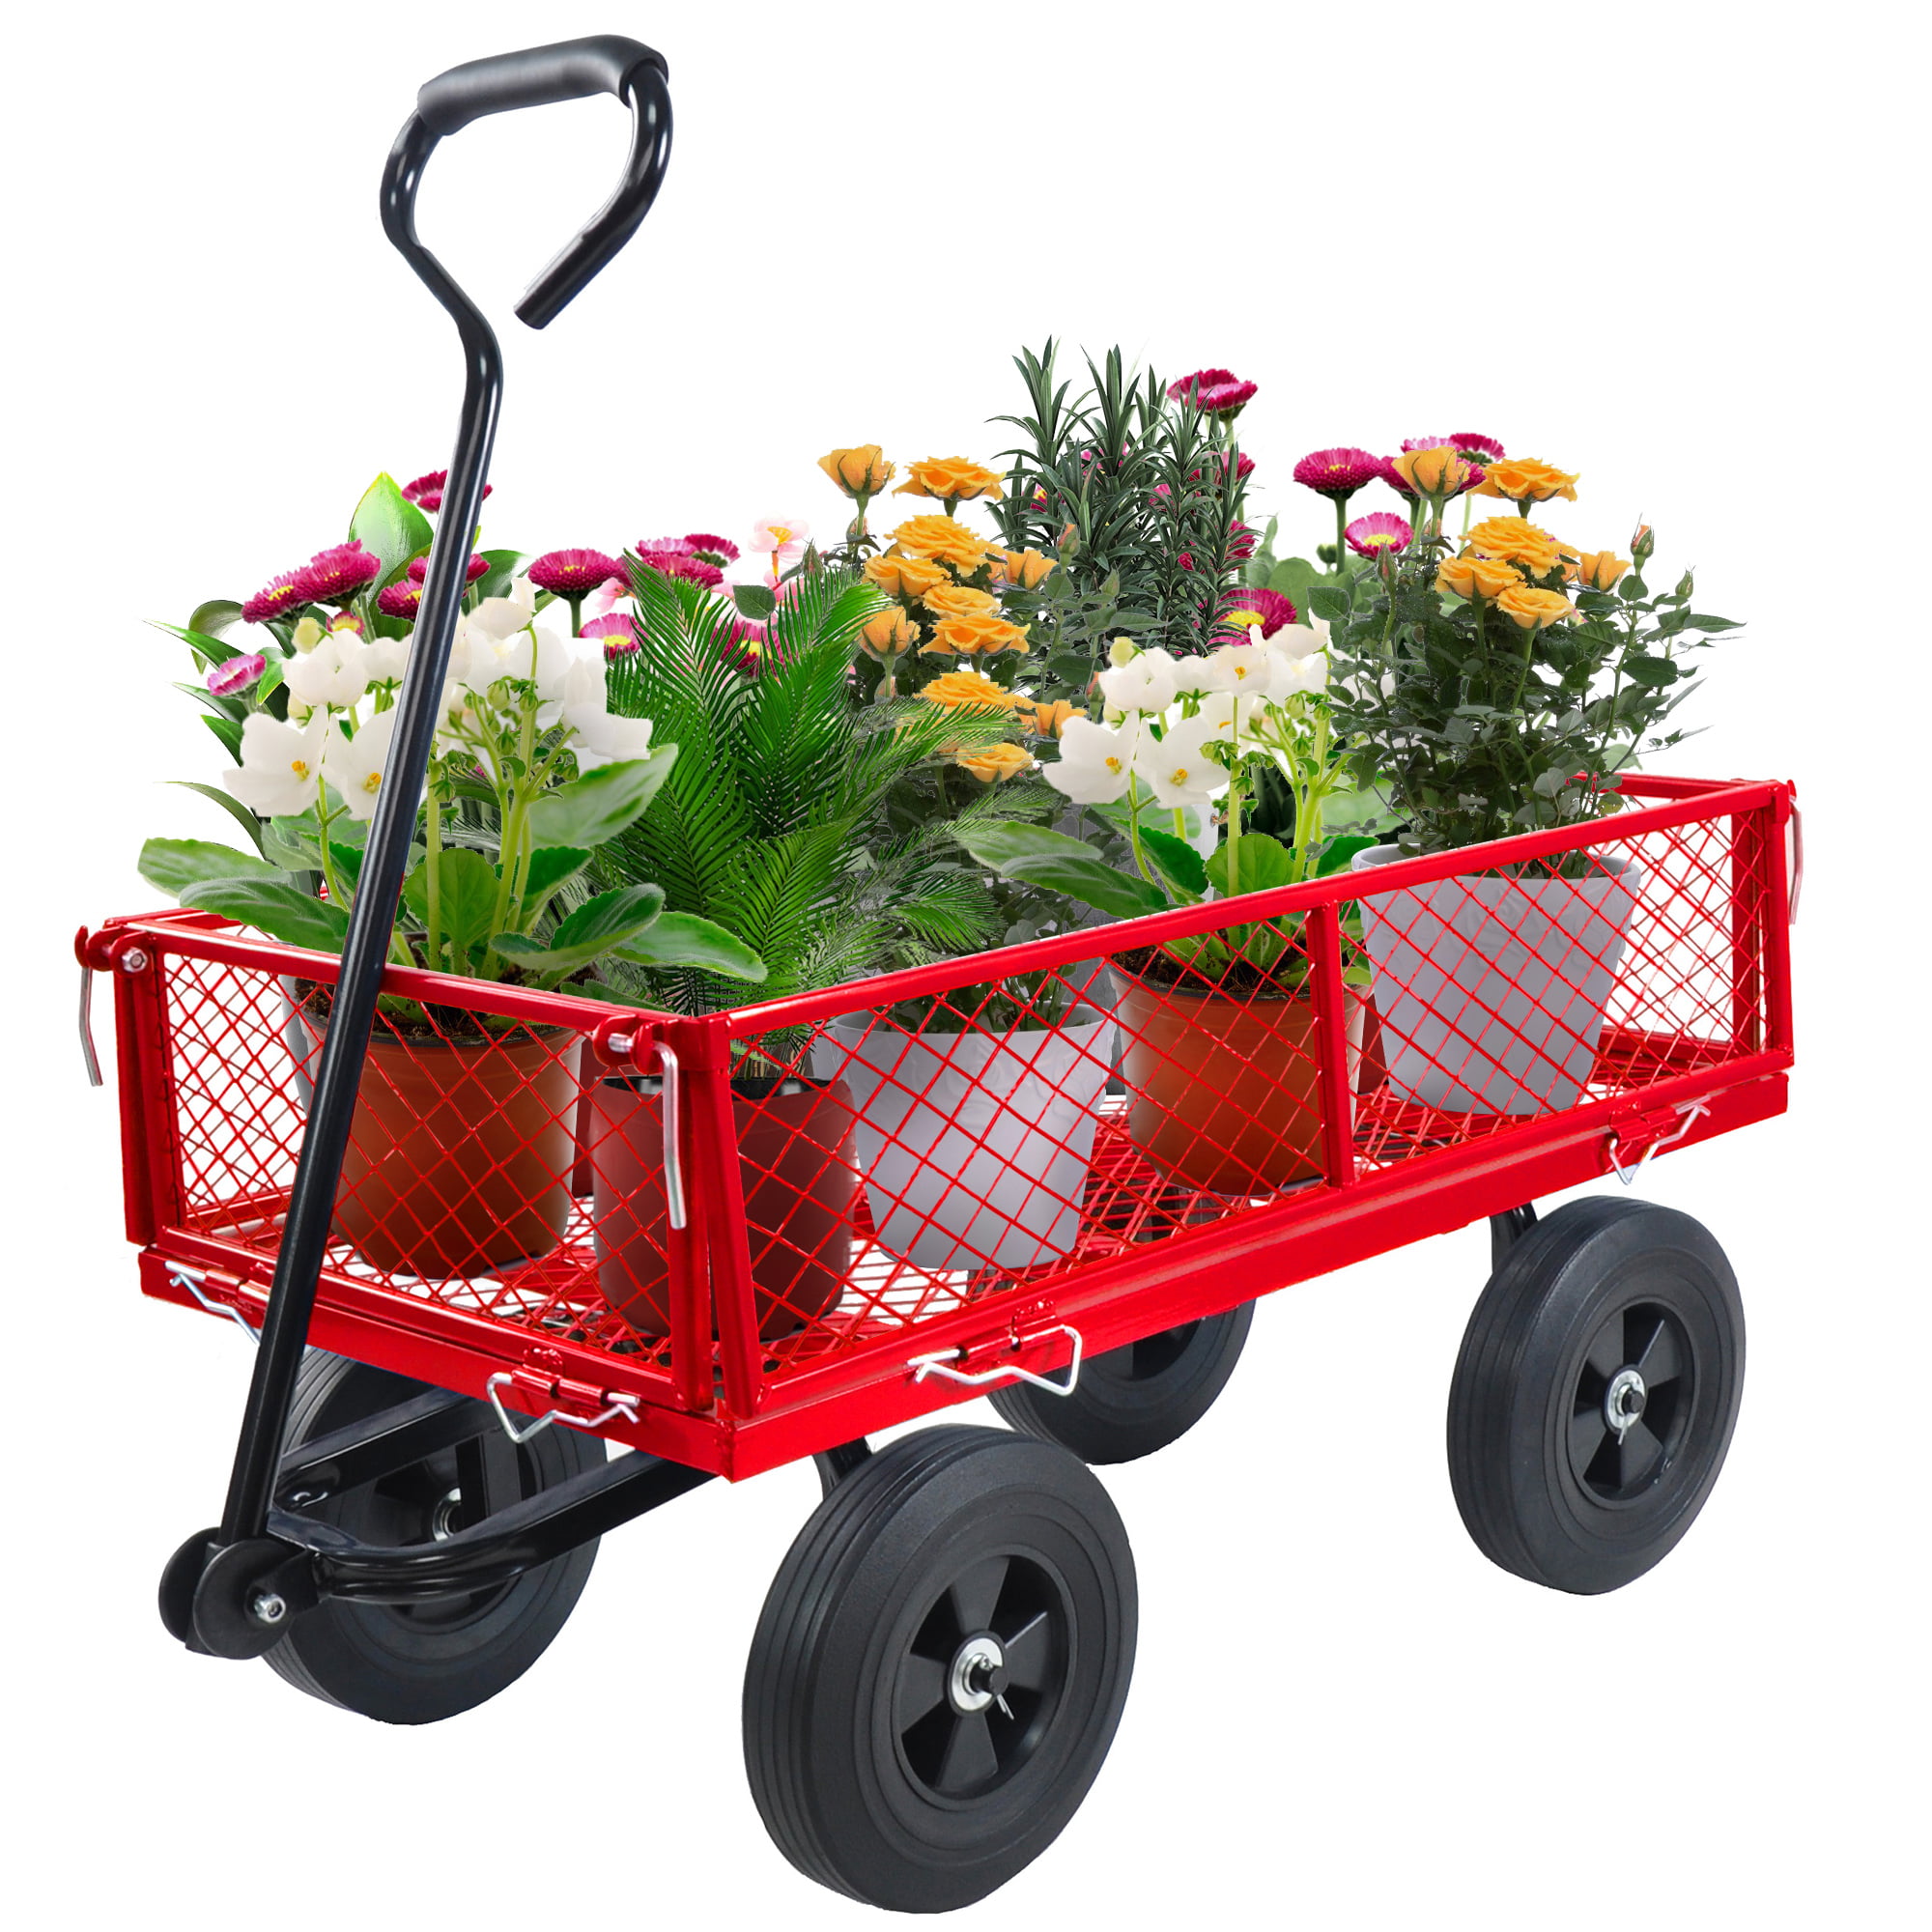 Elevon Heavy Duty Garden Cart, 400 Lb Weight Capacity, Liner